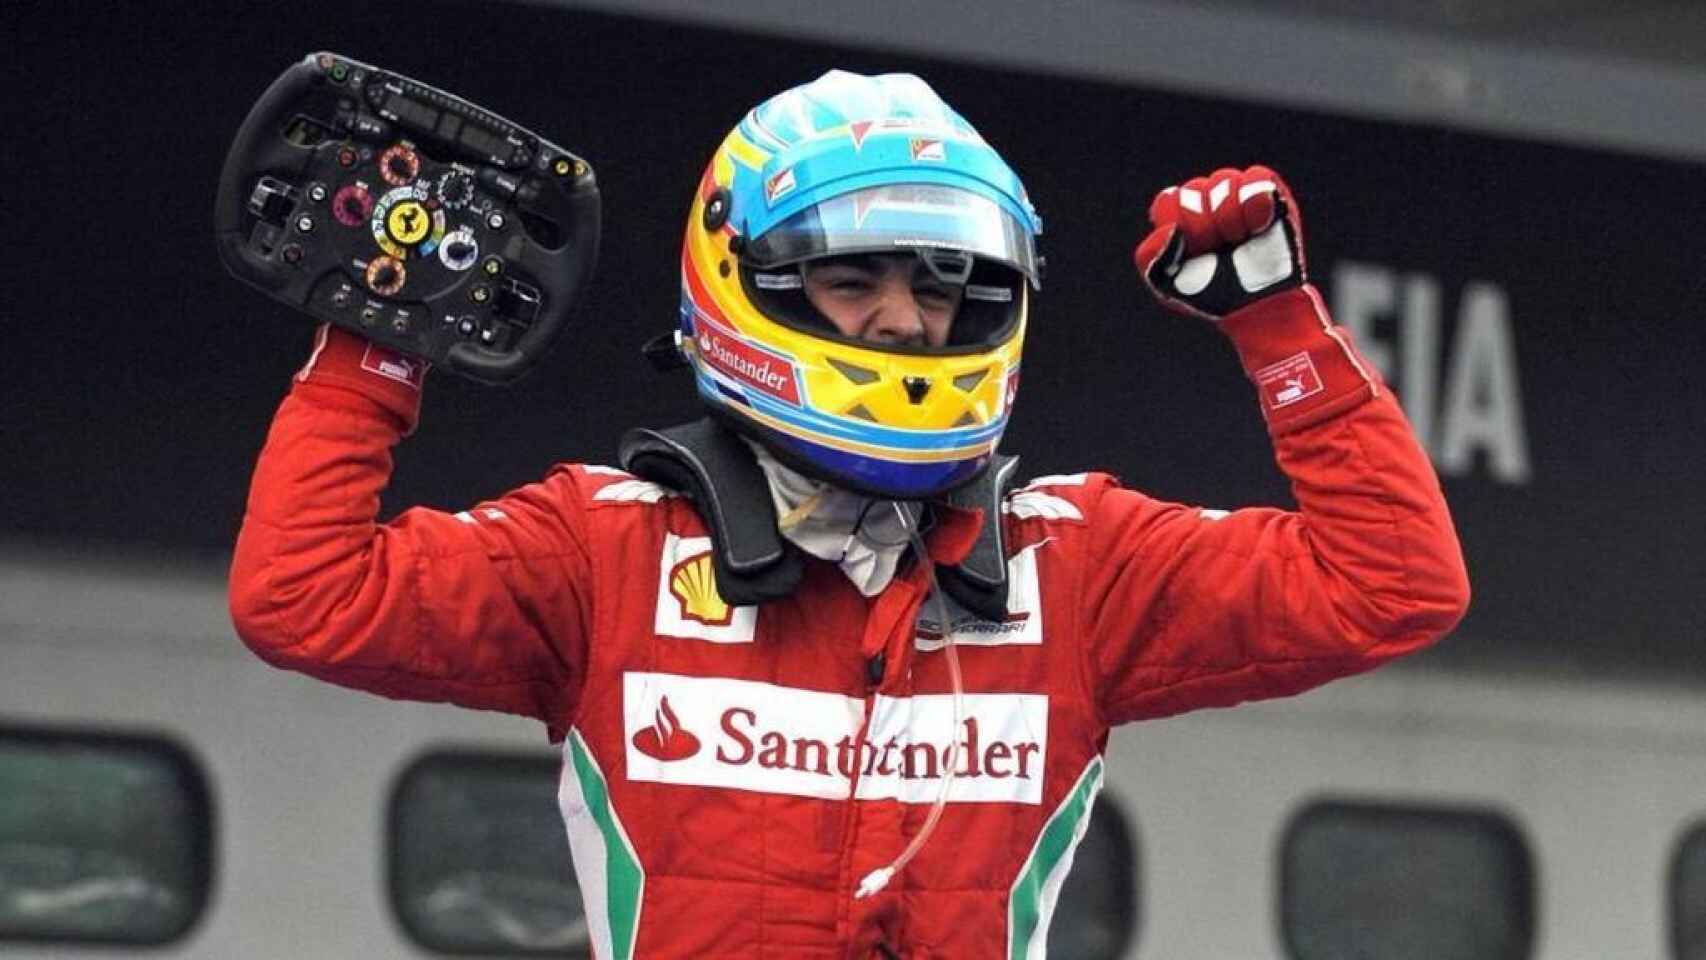 Fórmula 1: ¿Guiño de Alonso a Ferrari?: el asturiano se acuerda de